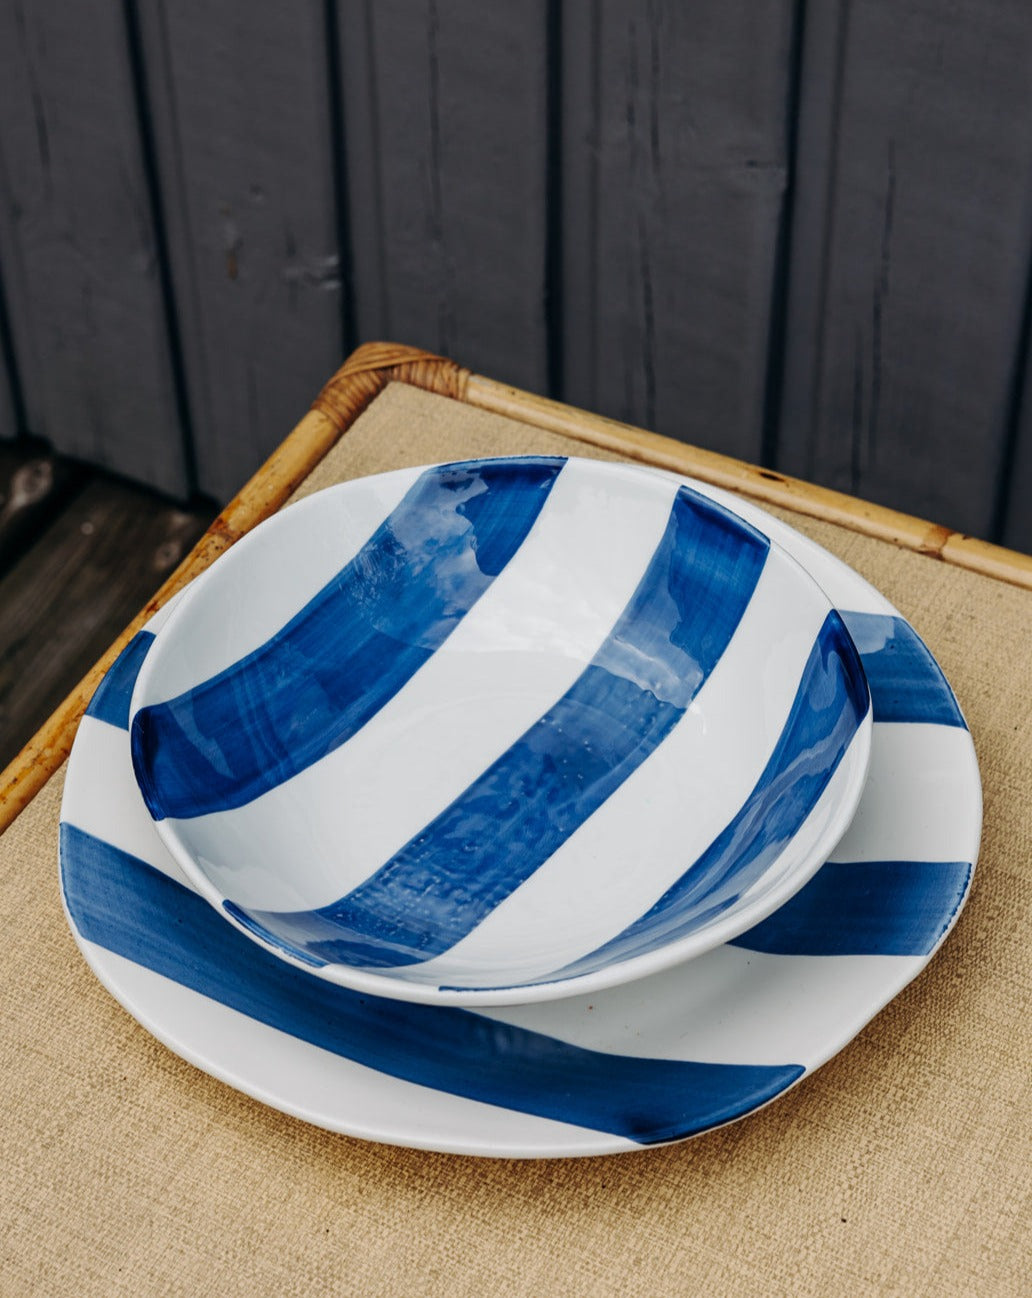 Lucia, the striped ceramic plate